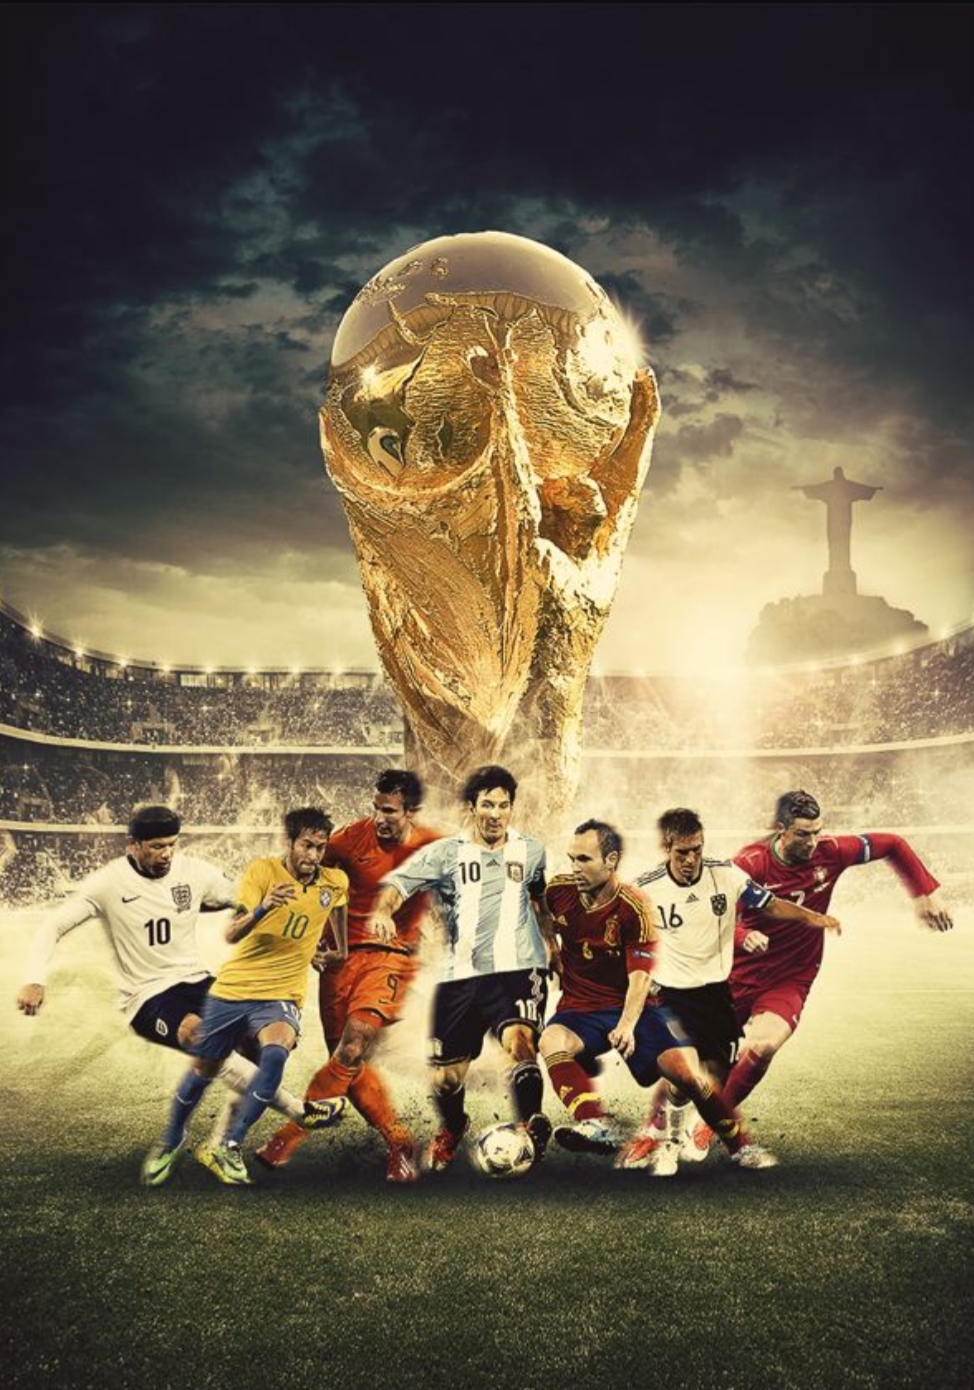 World cup soccer. Футбол. Постер футбол. Футбольные плакаты. Футбольные картинки.